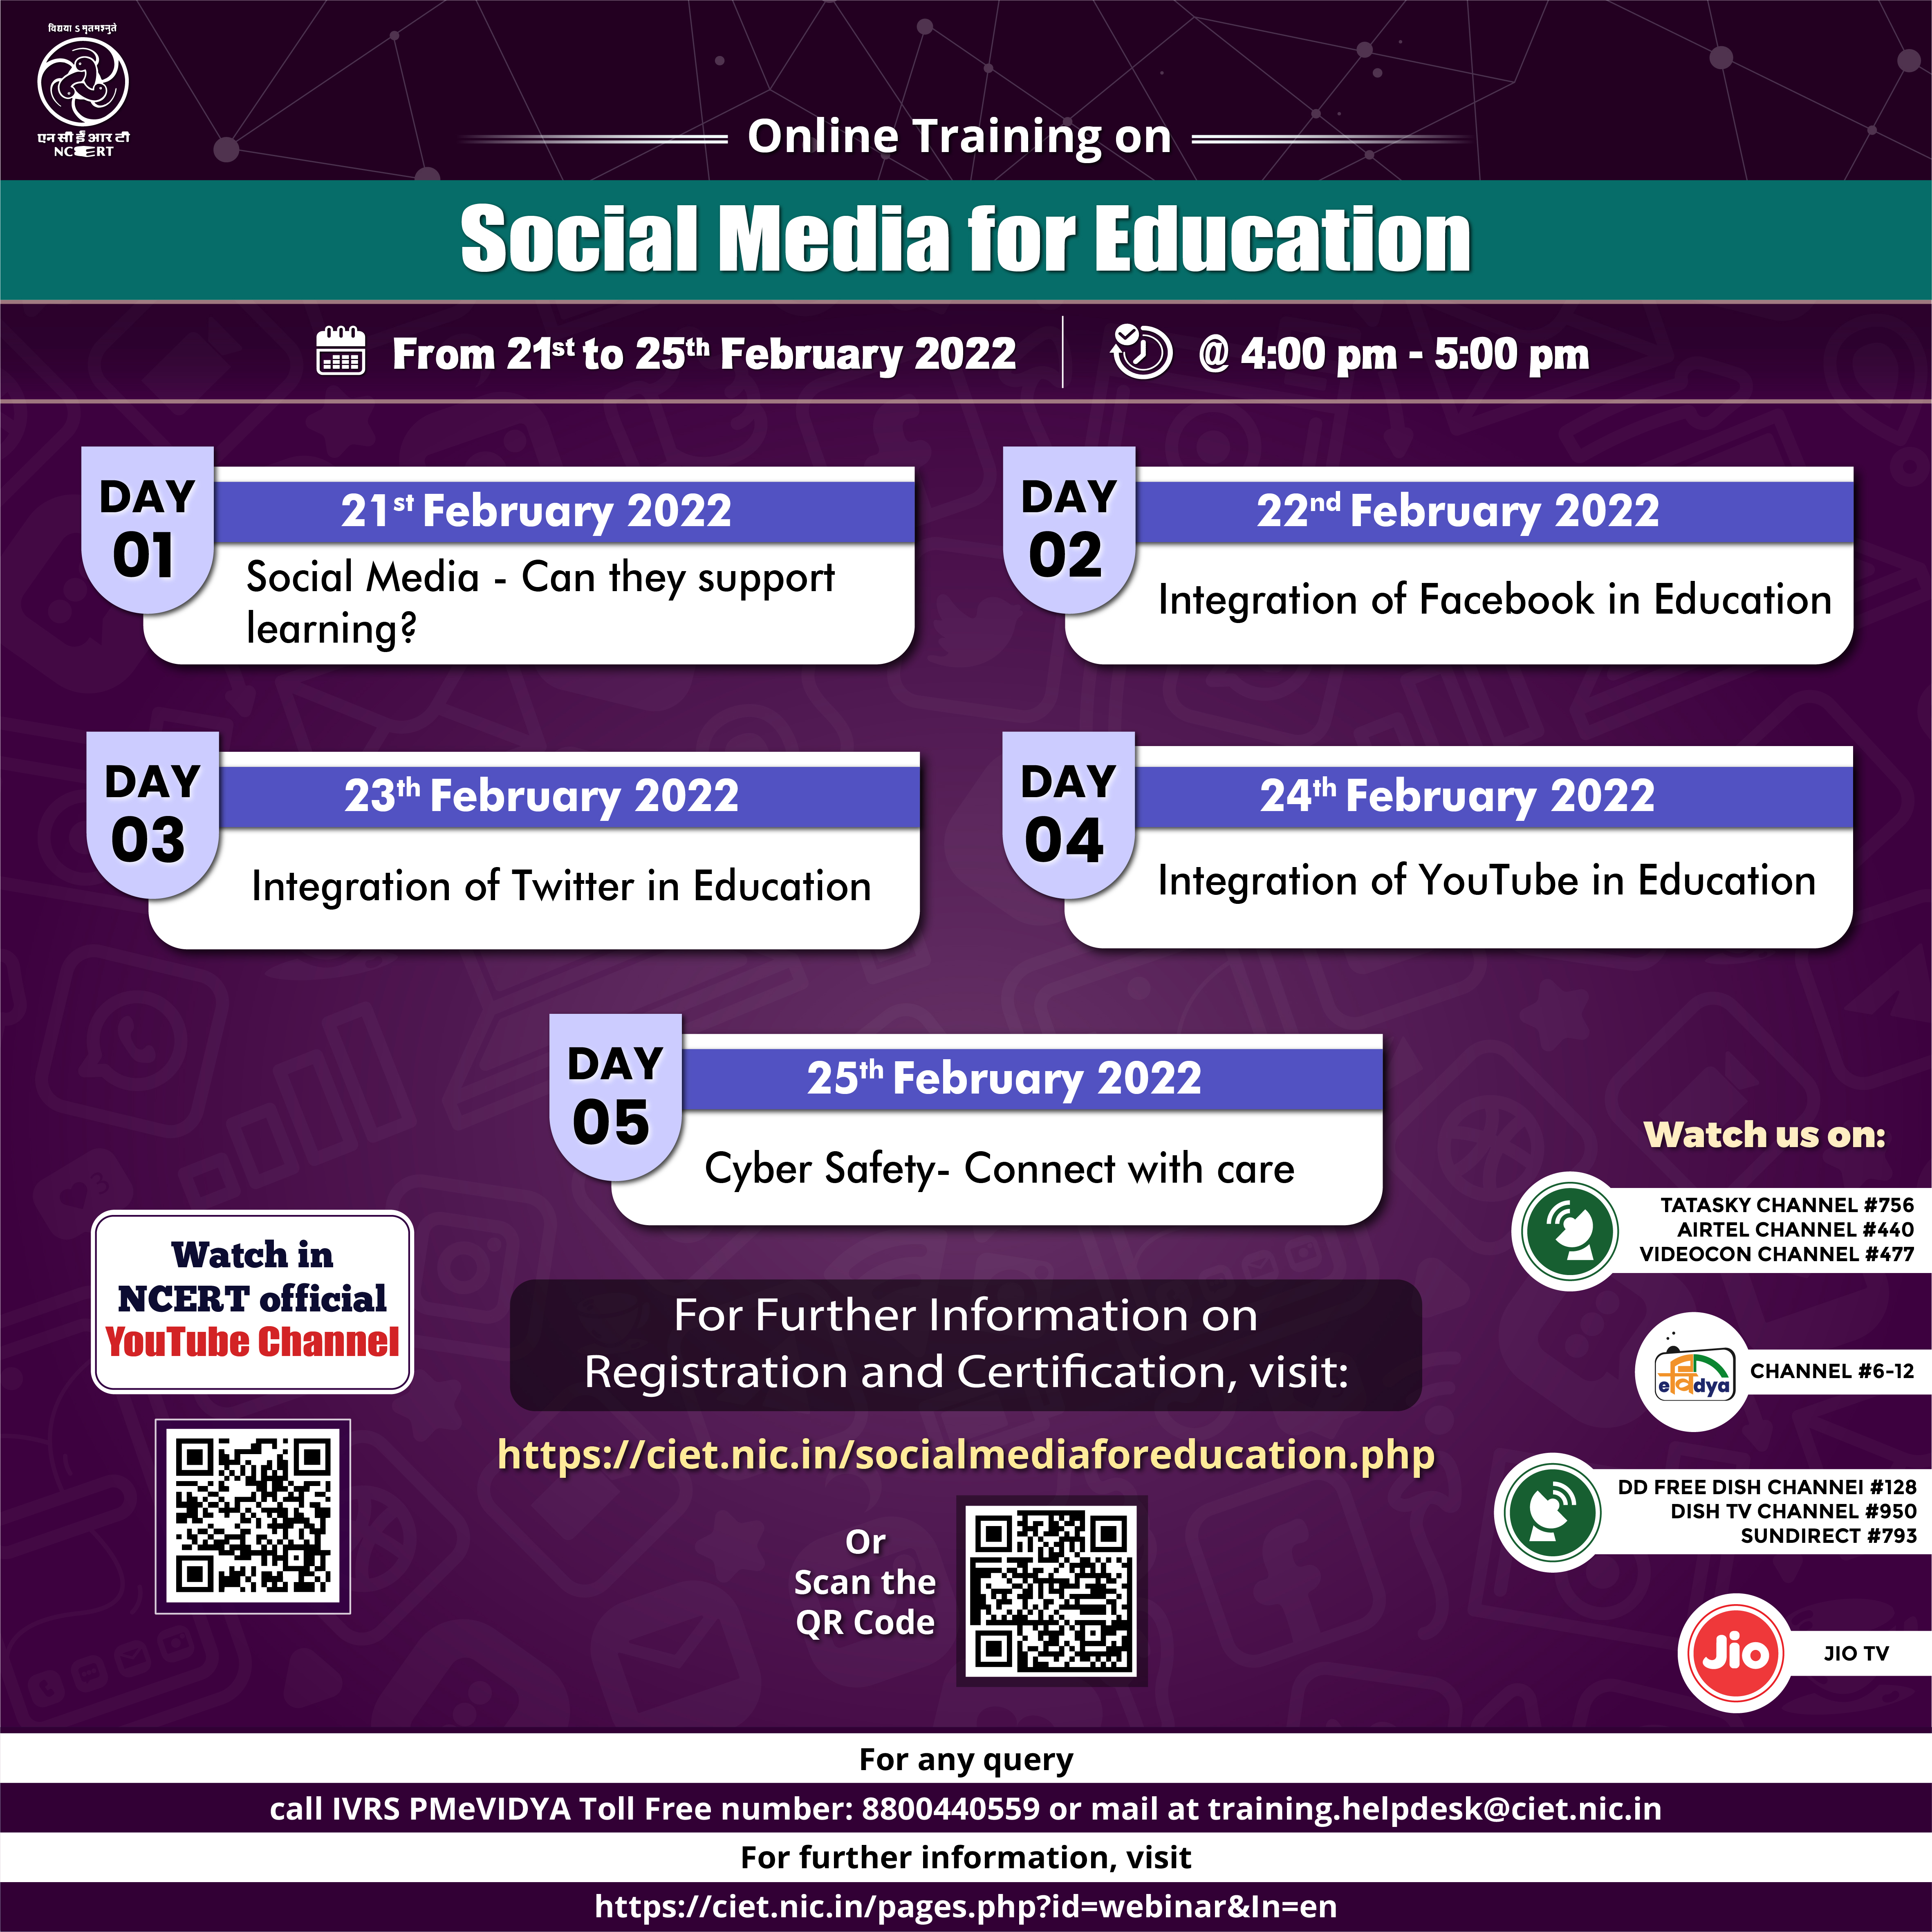 Online Training on “Social Media for Education” Image